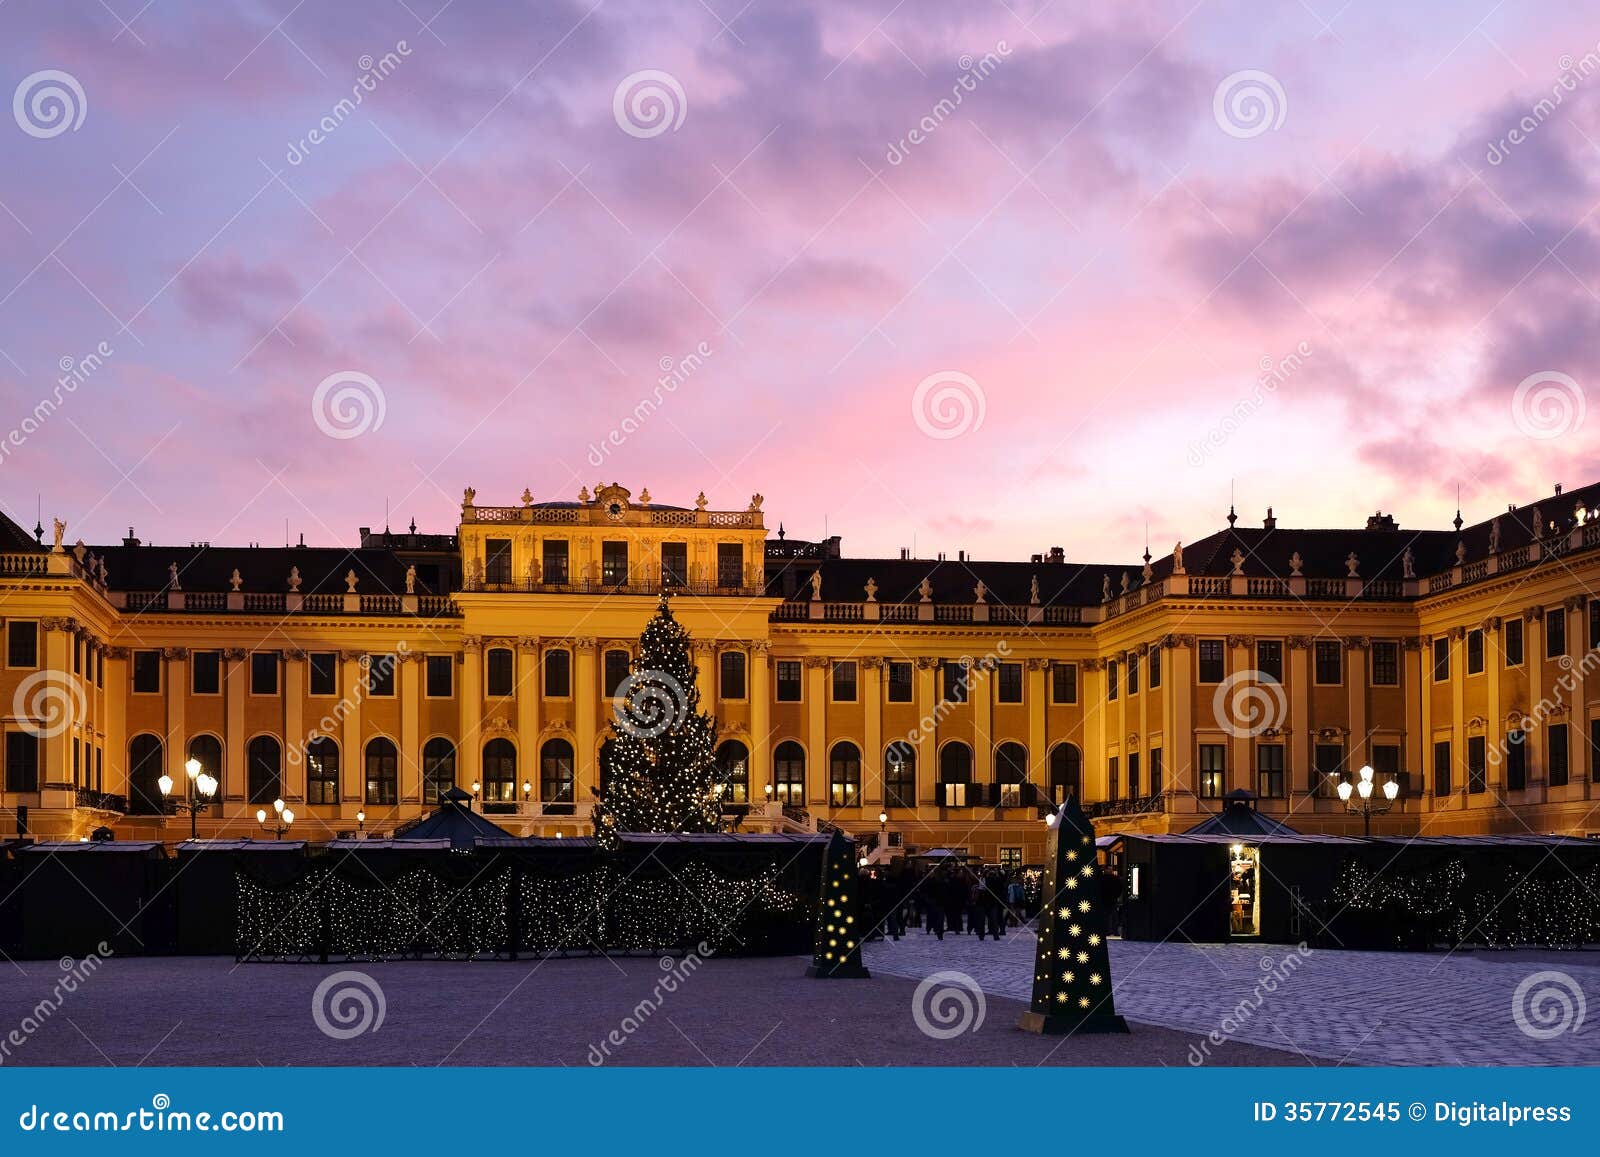 Christmas Market Schonbrunn - Vienna Editorial Image - Image of tree